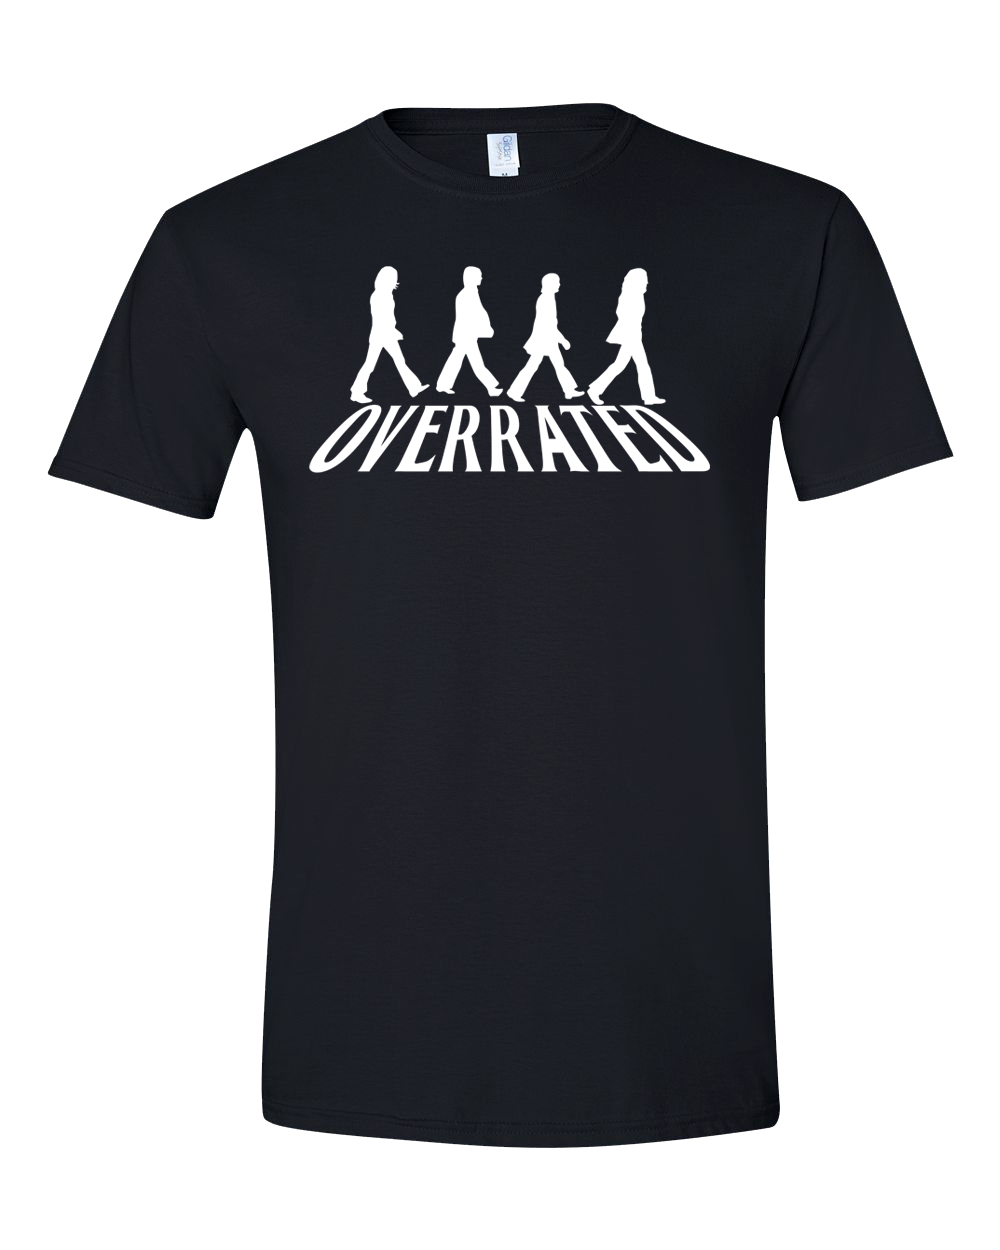 KHP “Overrated” Unisex T-Shirt